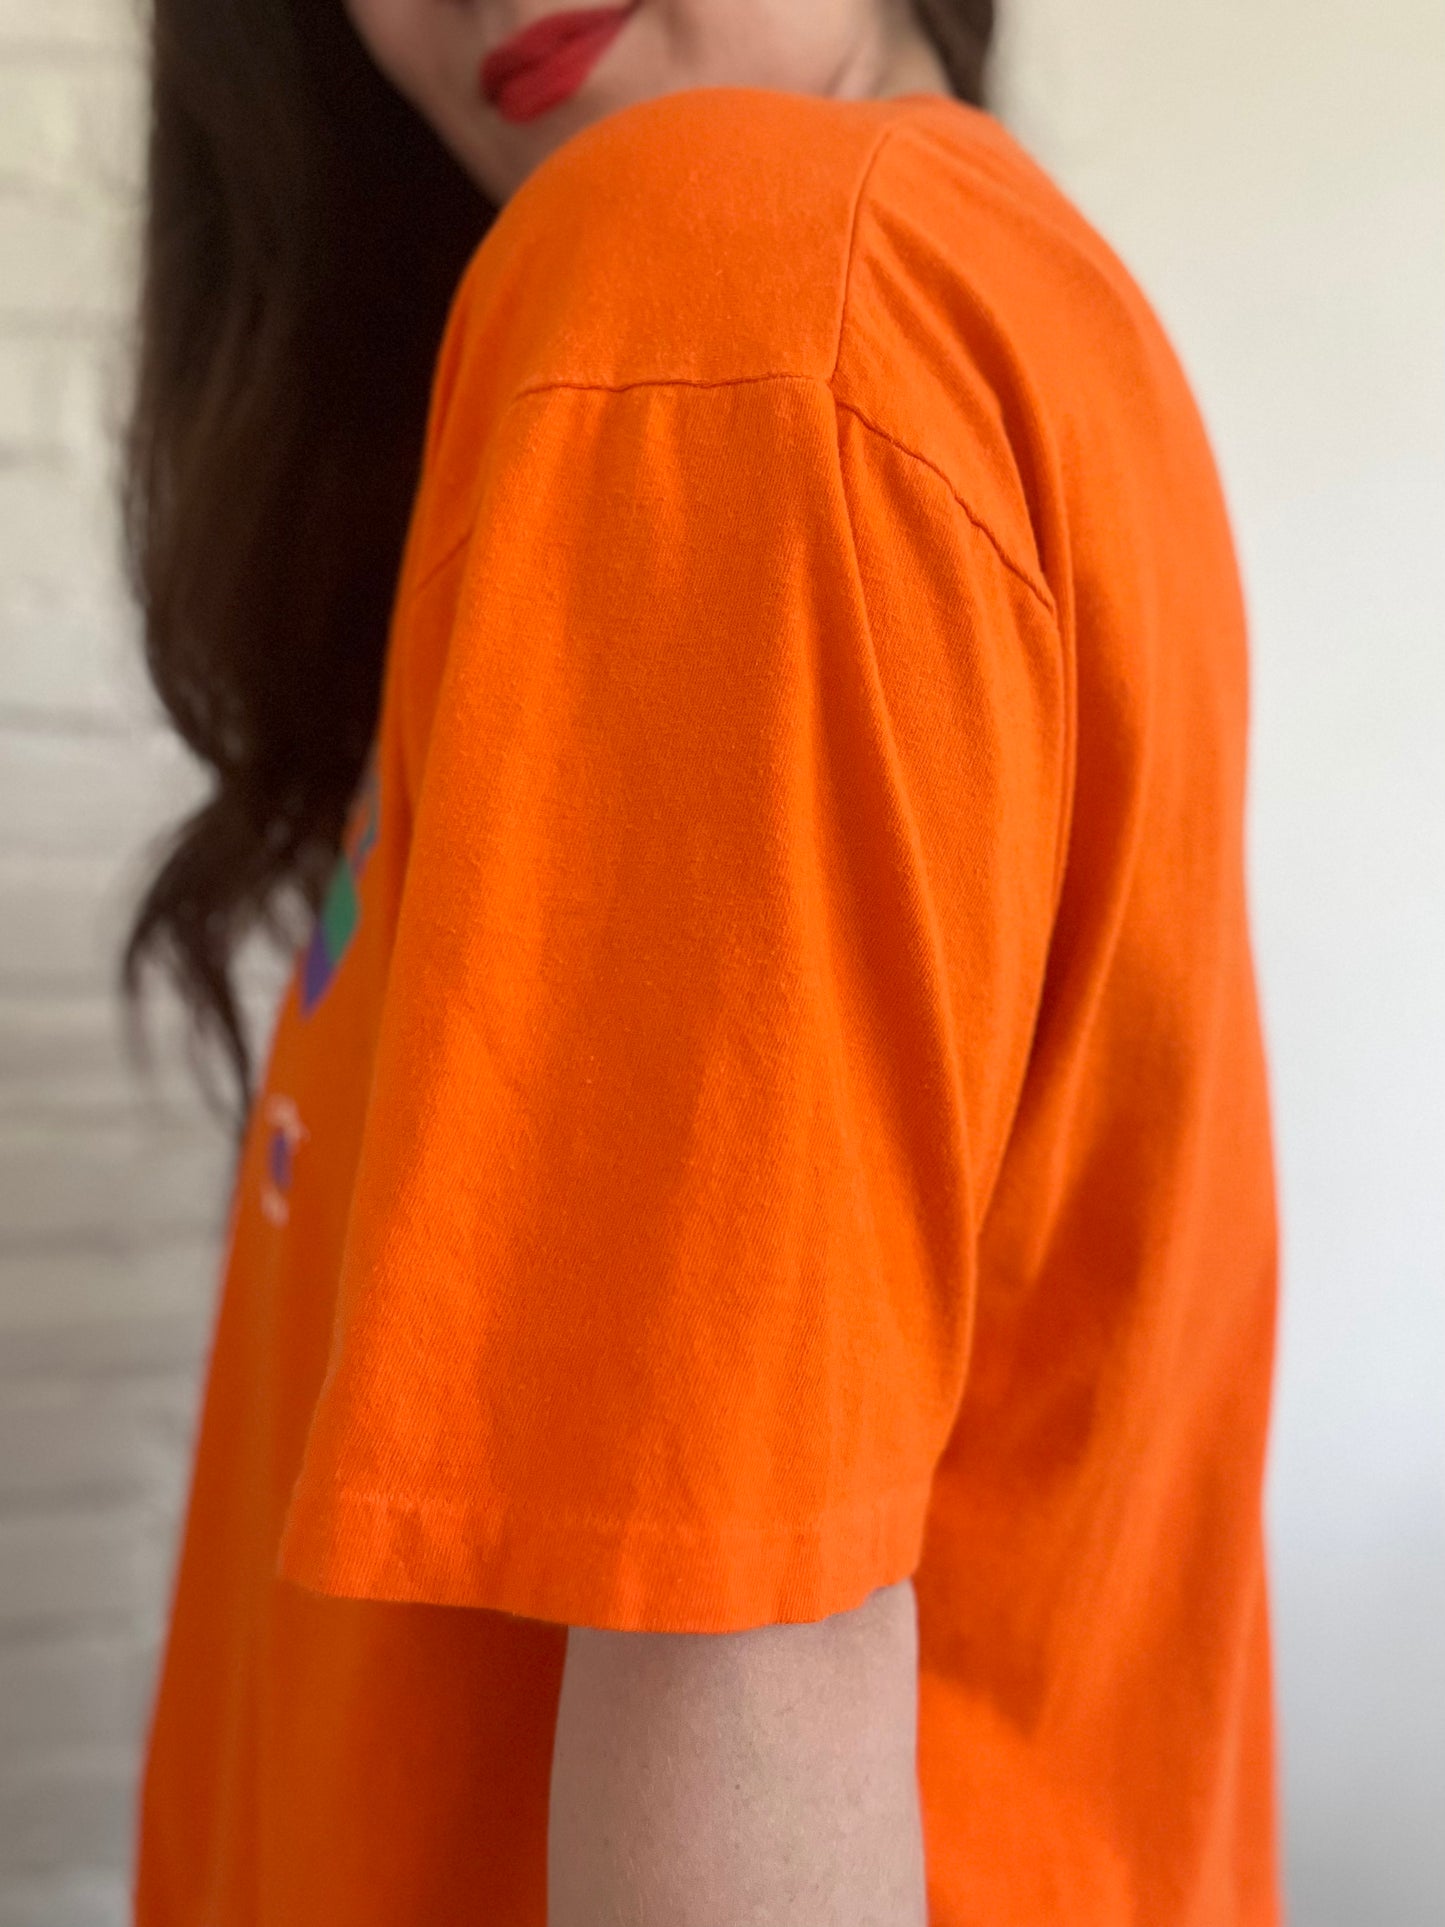 90s Cotton Ginny Orange T-Shirt - XL